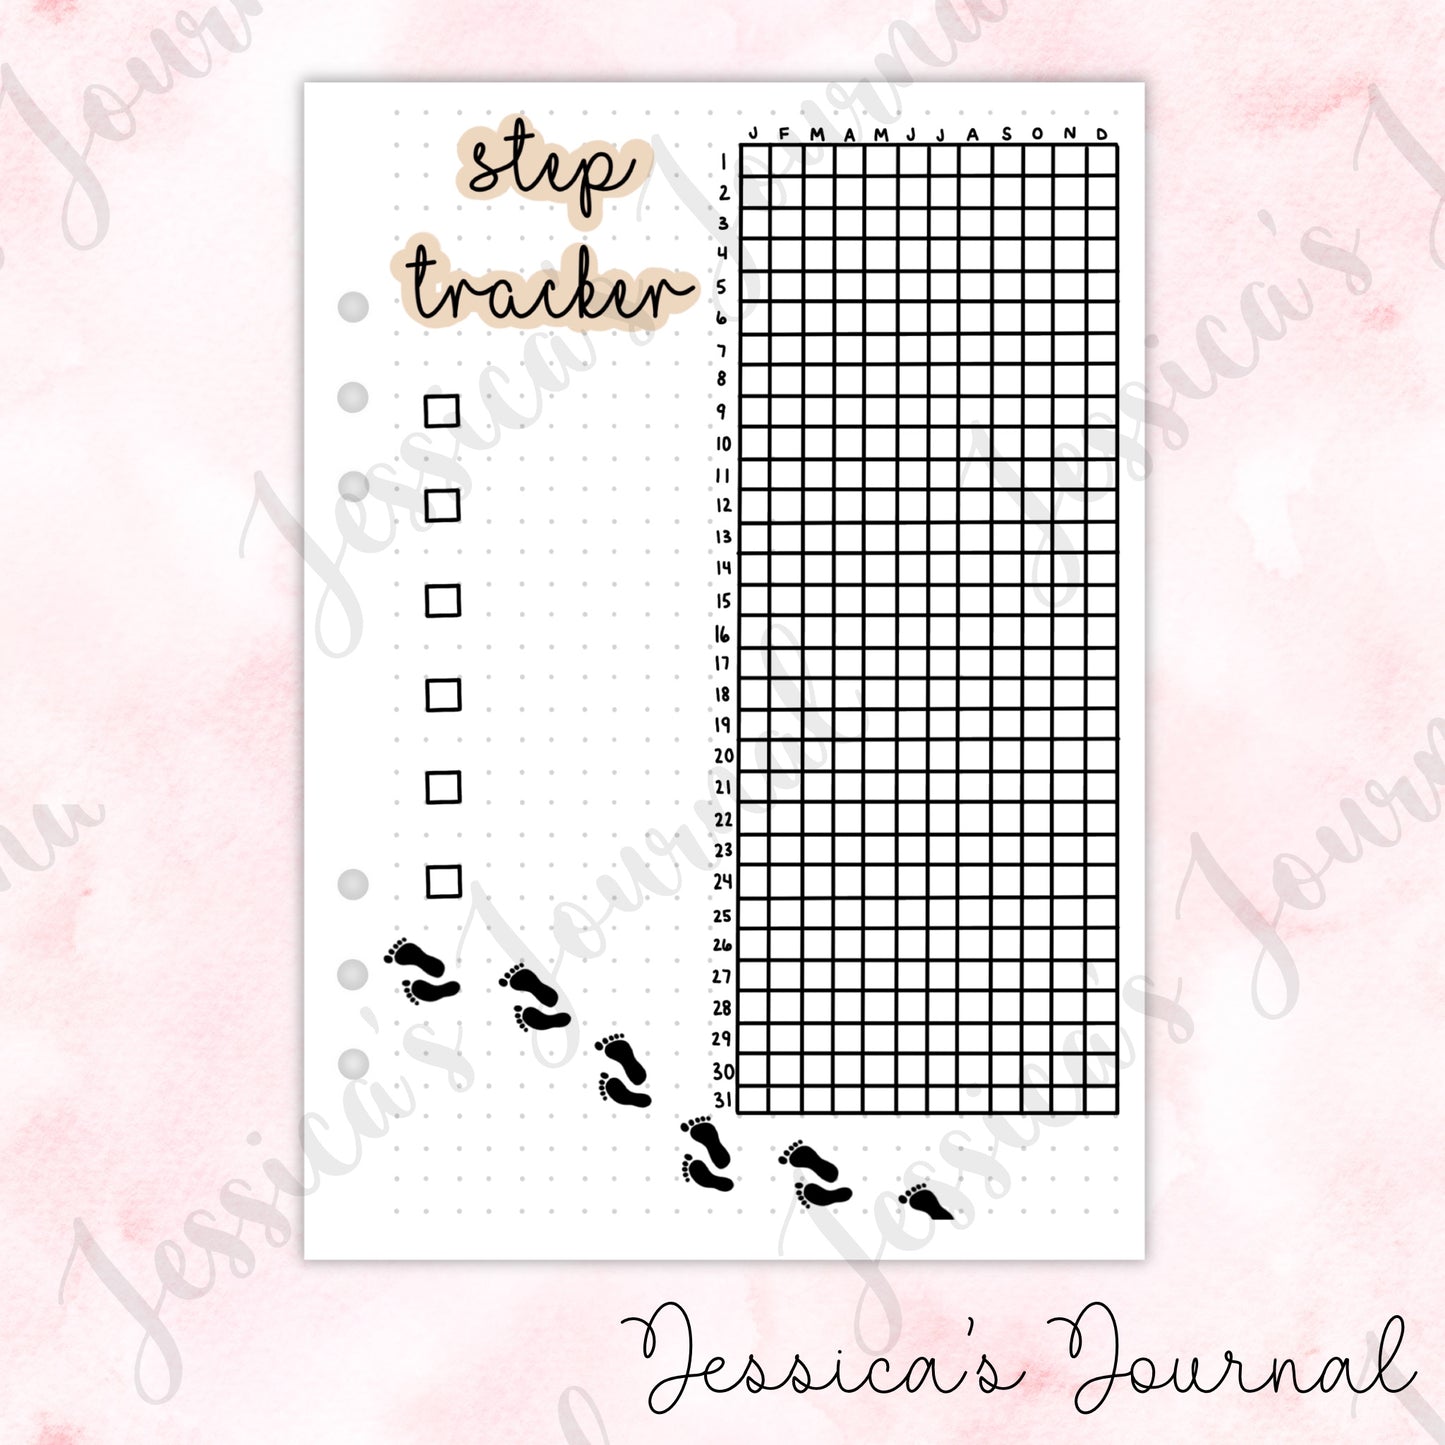 Step Tracker | Journal Spread